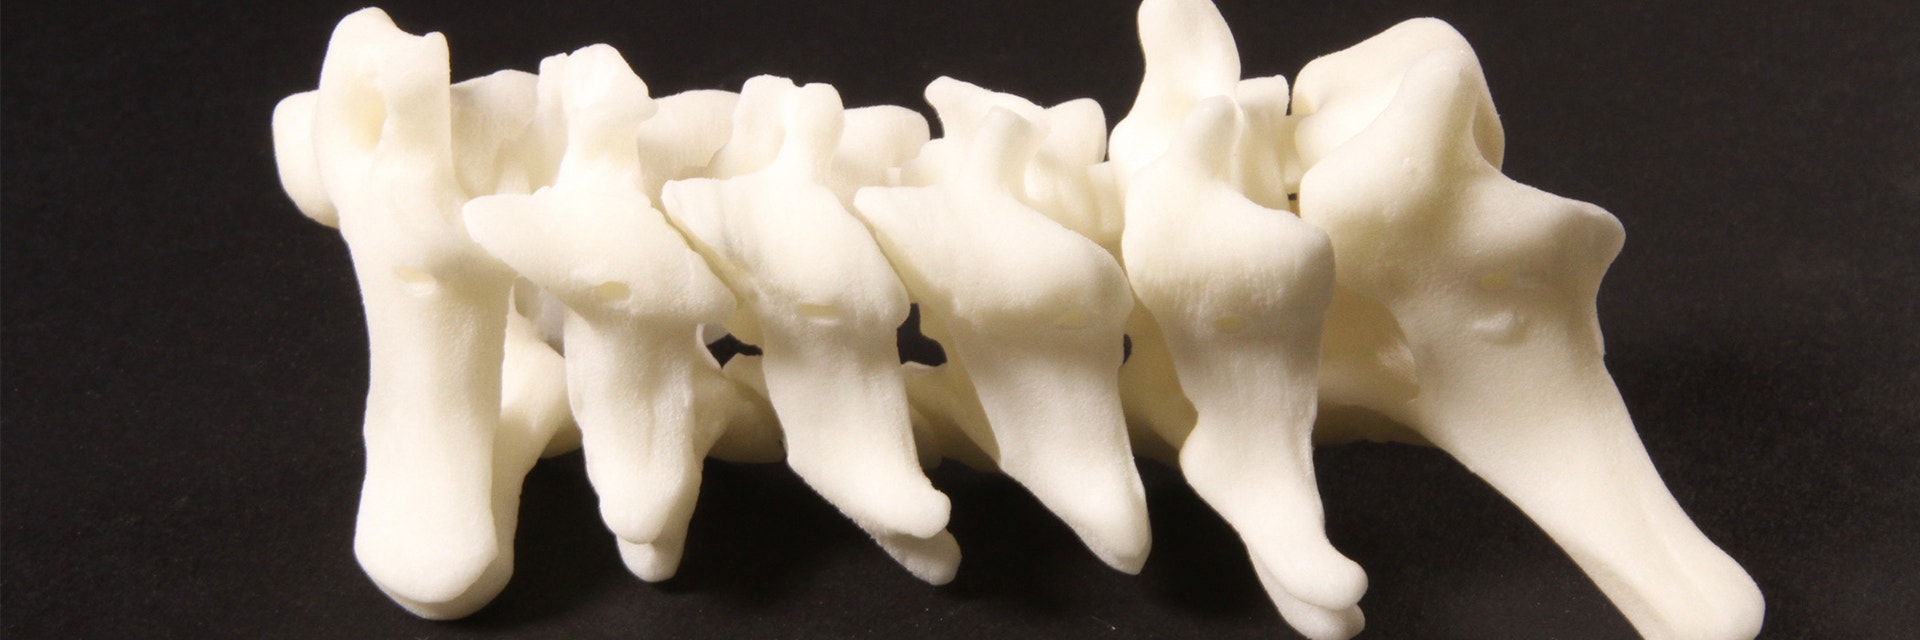 3D Printed spine